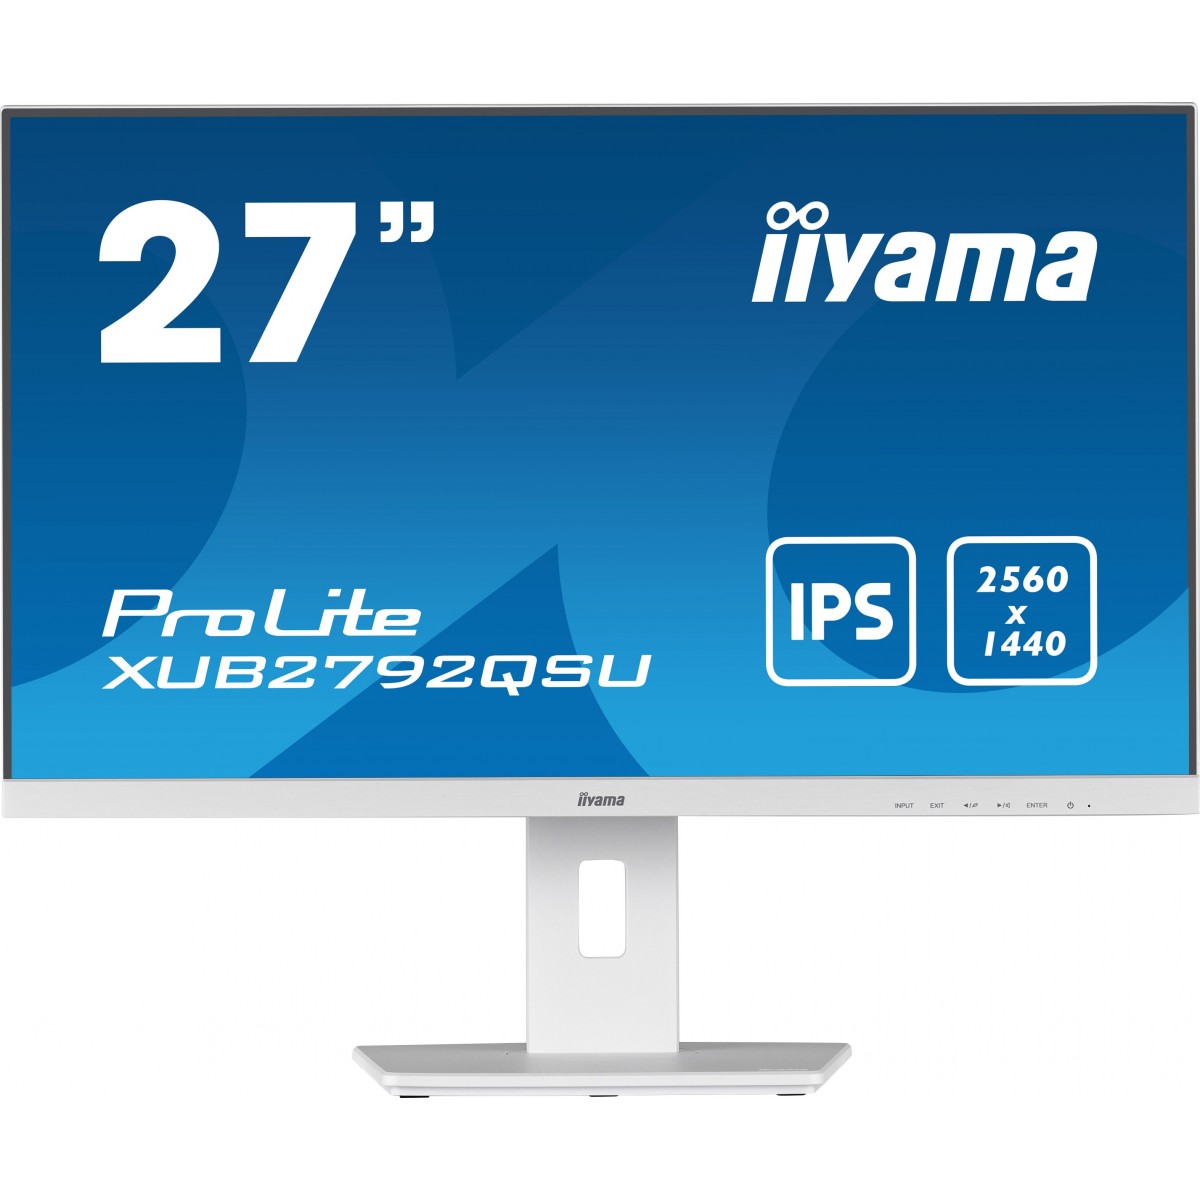 Iiyama 27W LCD Business WQHD IPS - Flat Screen